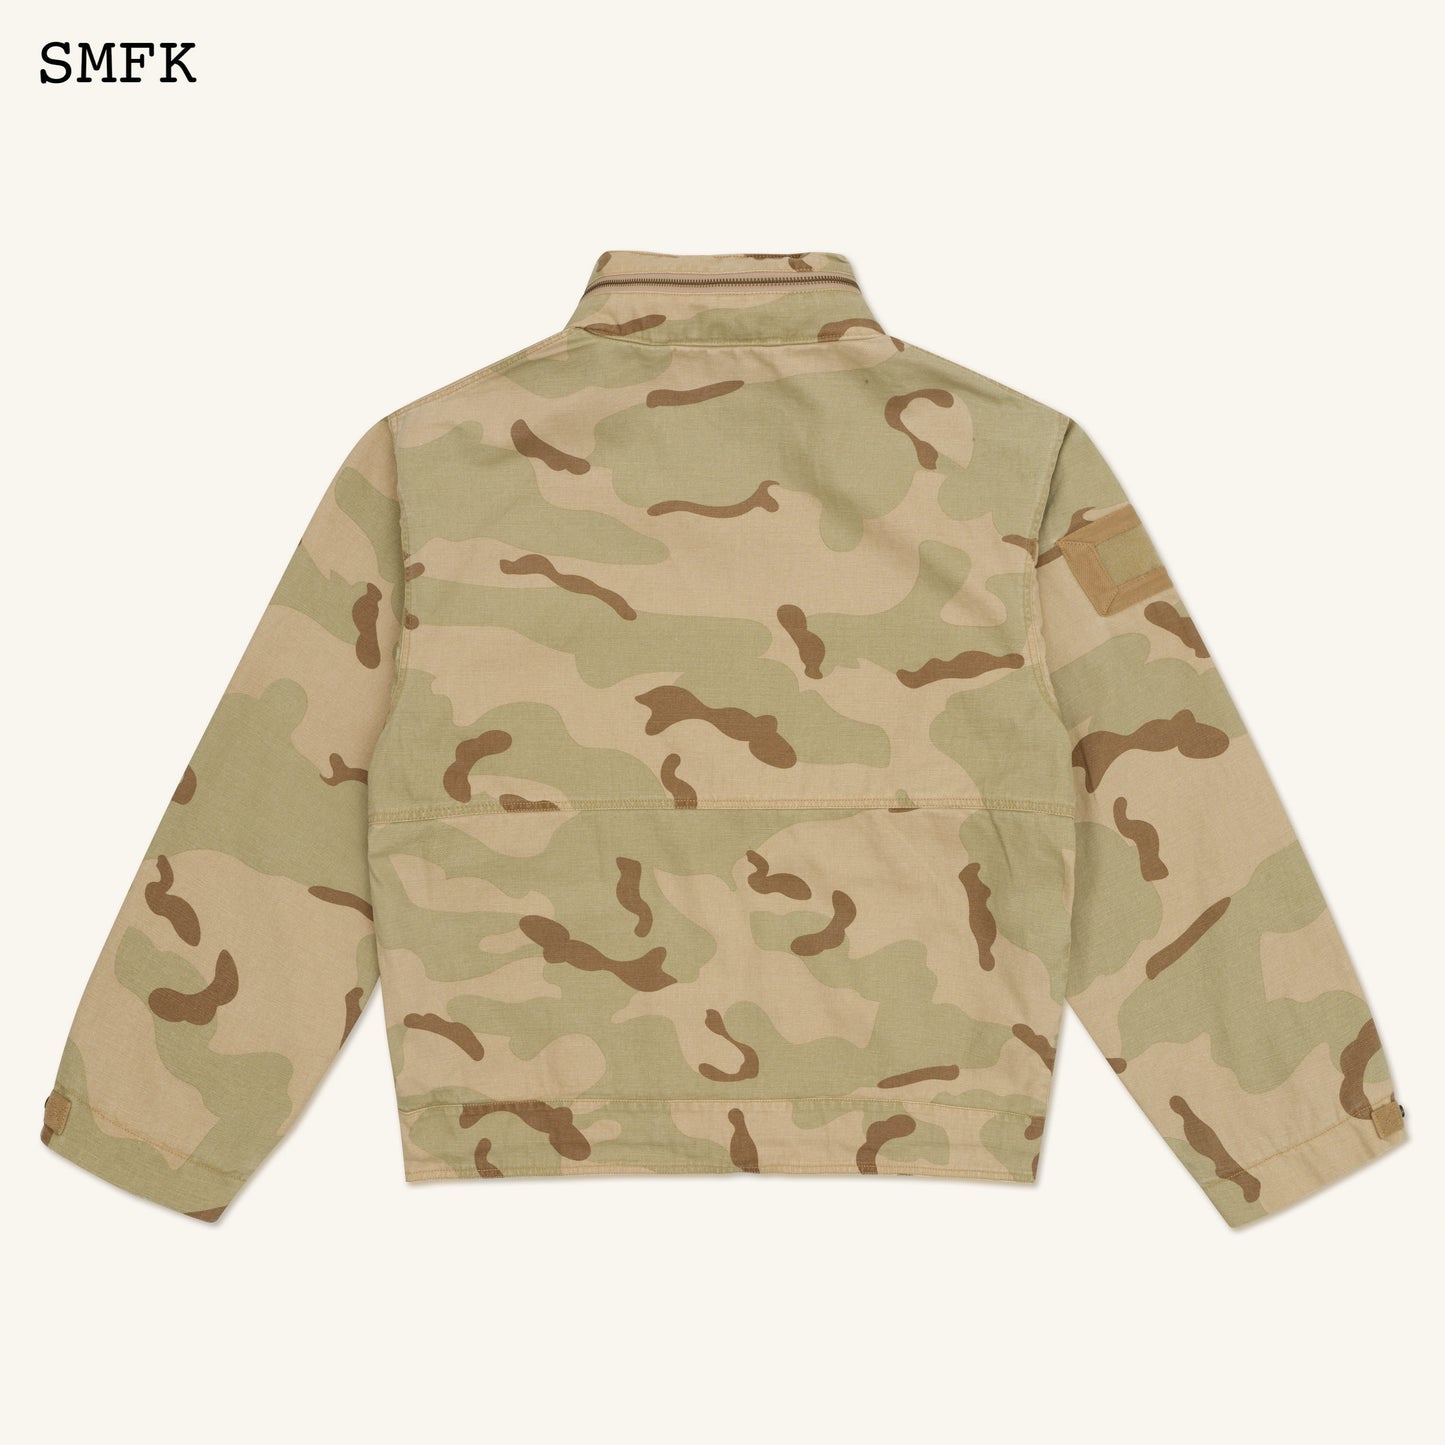 SMFK Ancient Myth Cobra Desert Camouflage Workwear Jacket